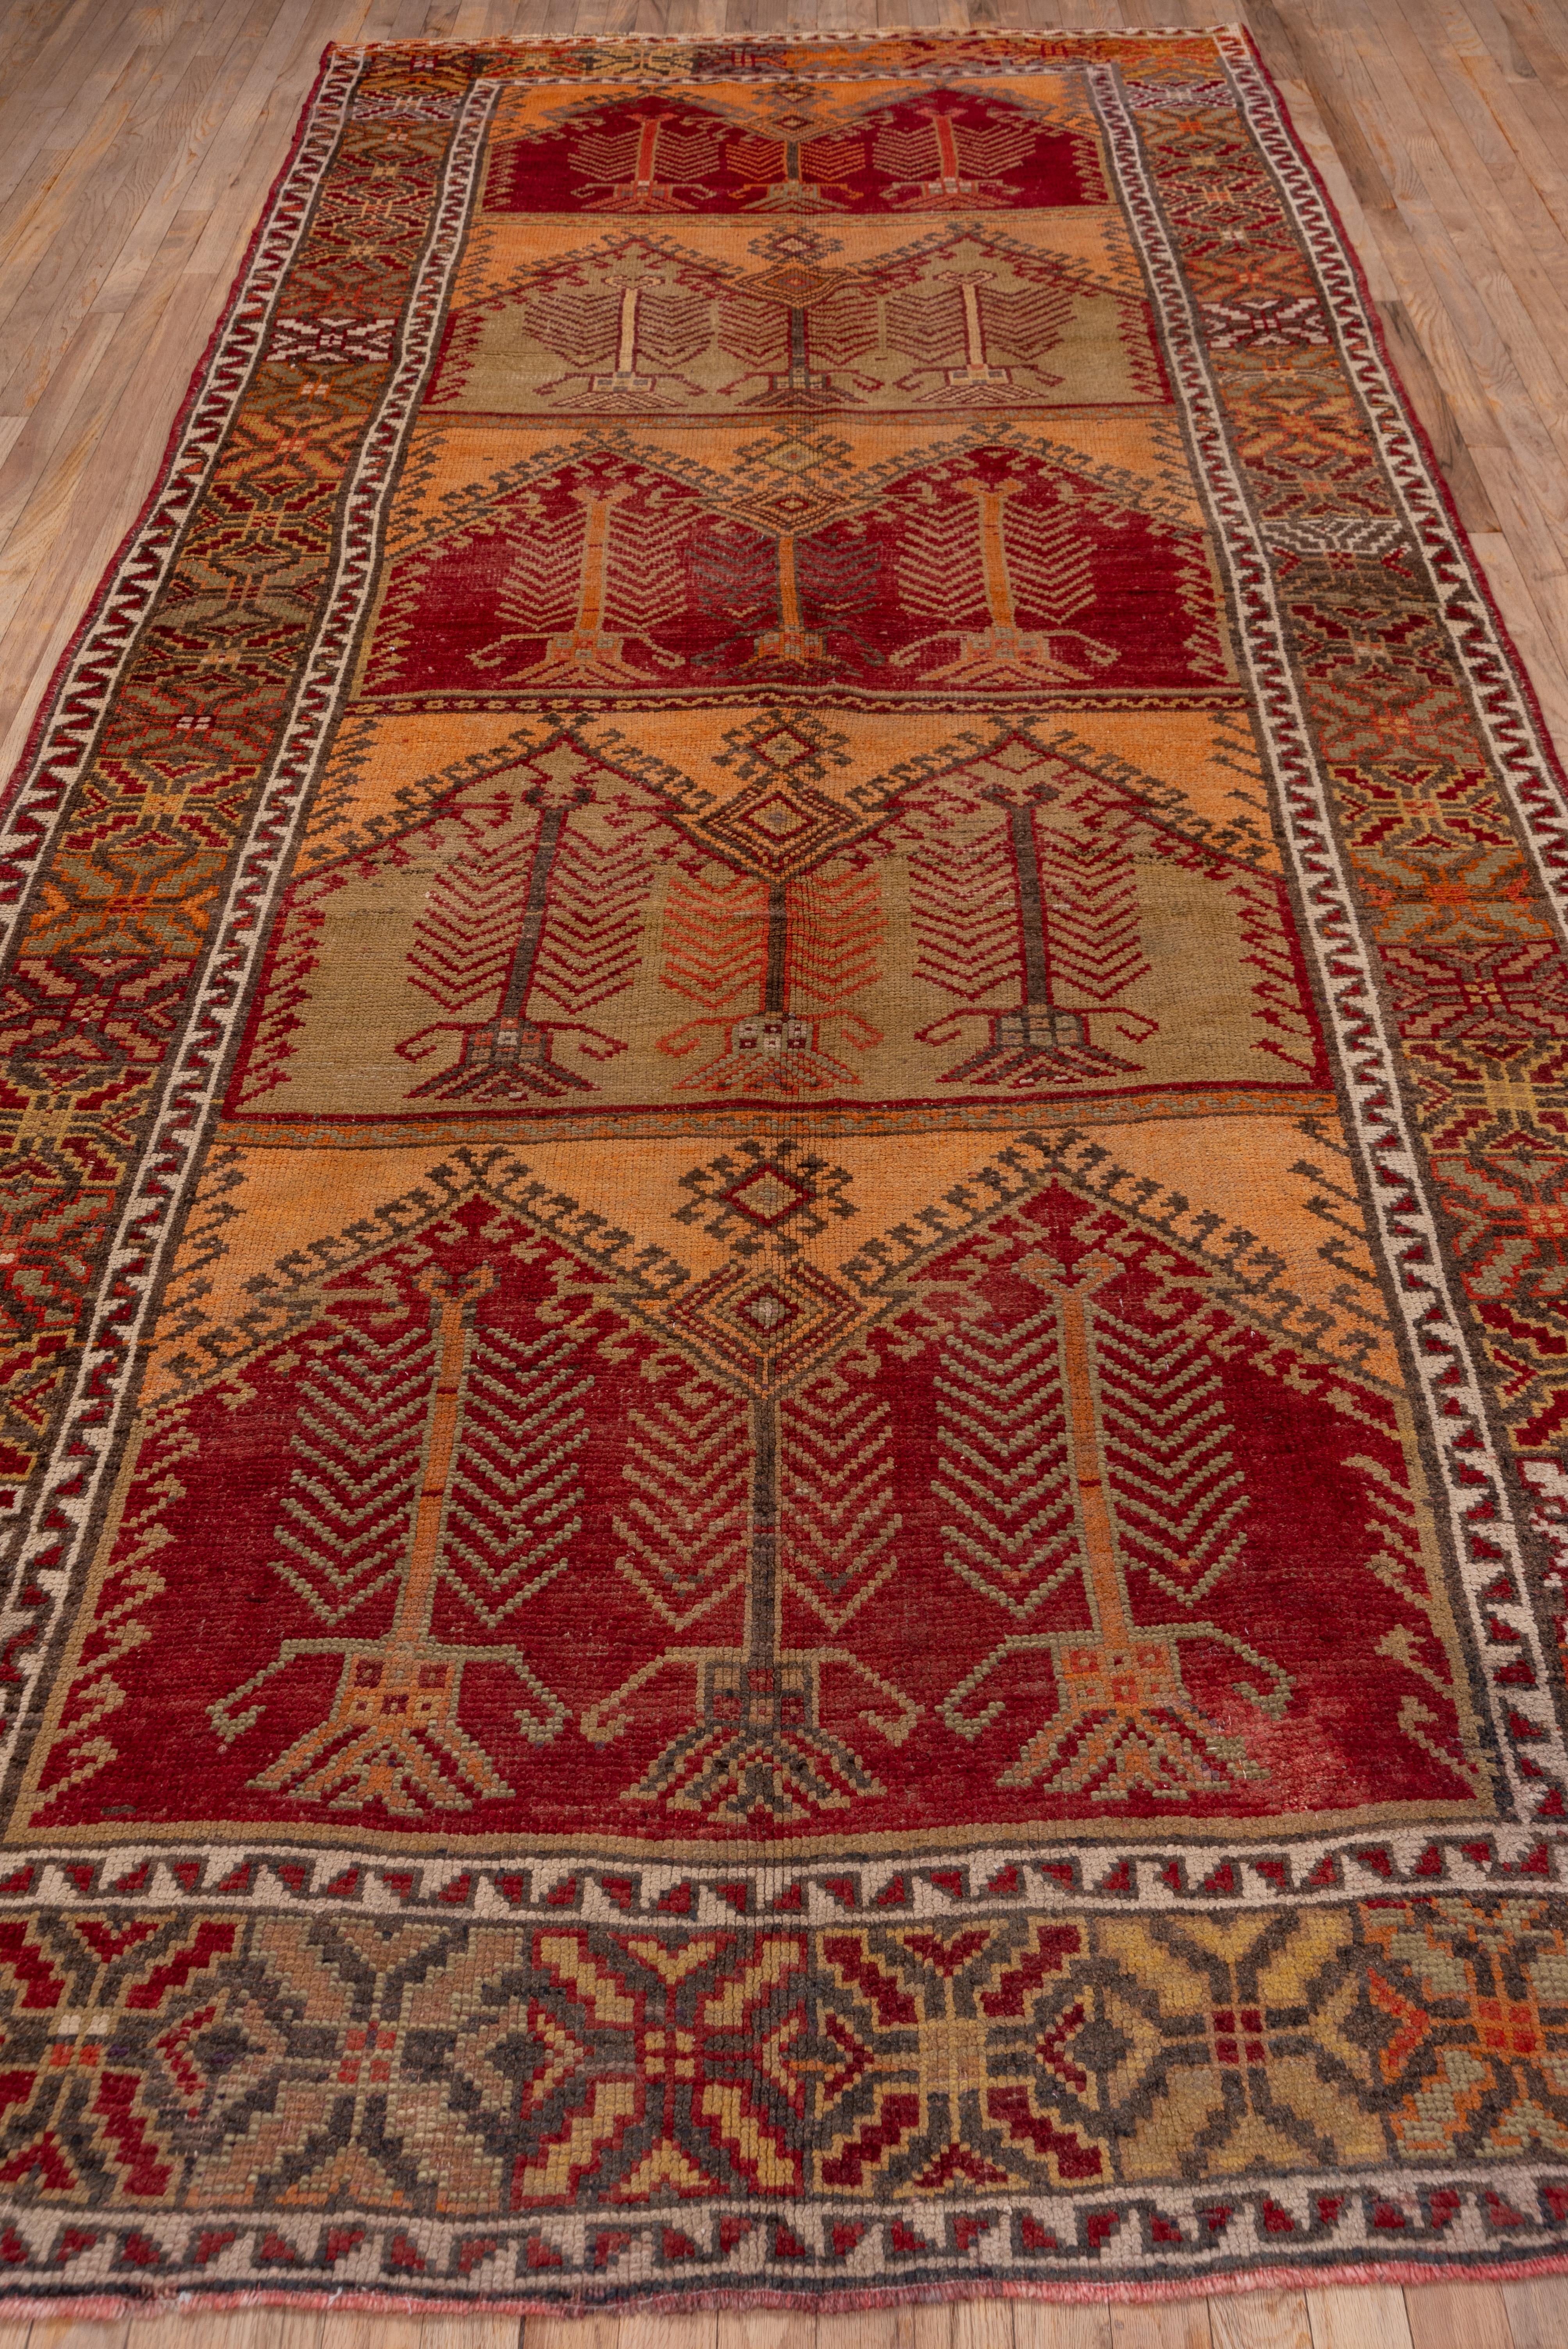 Mid-20th Century Antique Rustic Turkish Anatolian Gallery Carpet, Warm Colors, circa 1930s